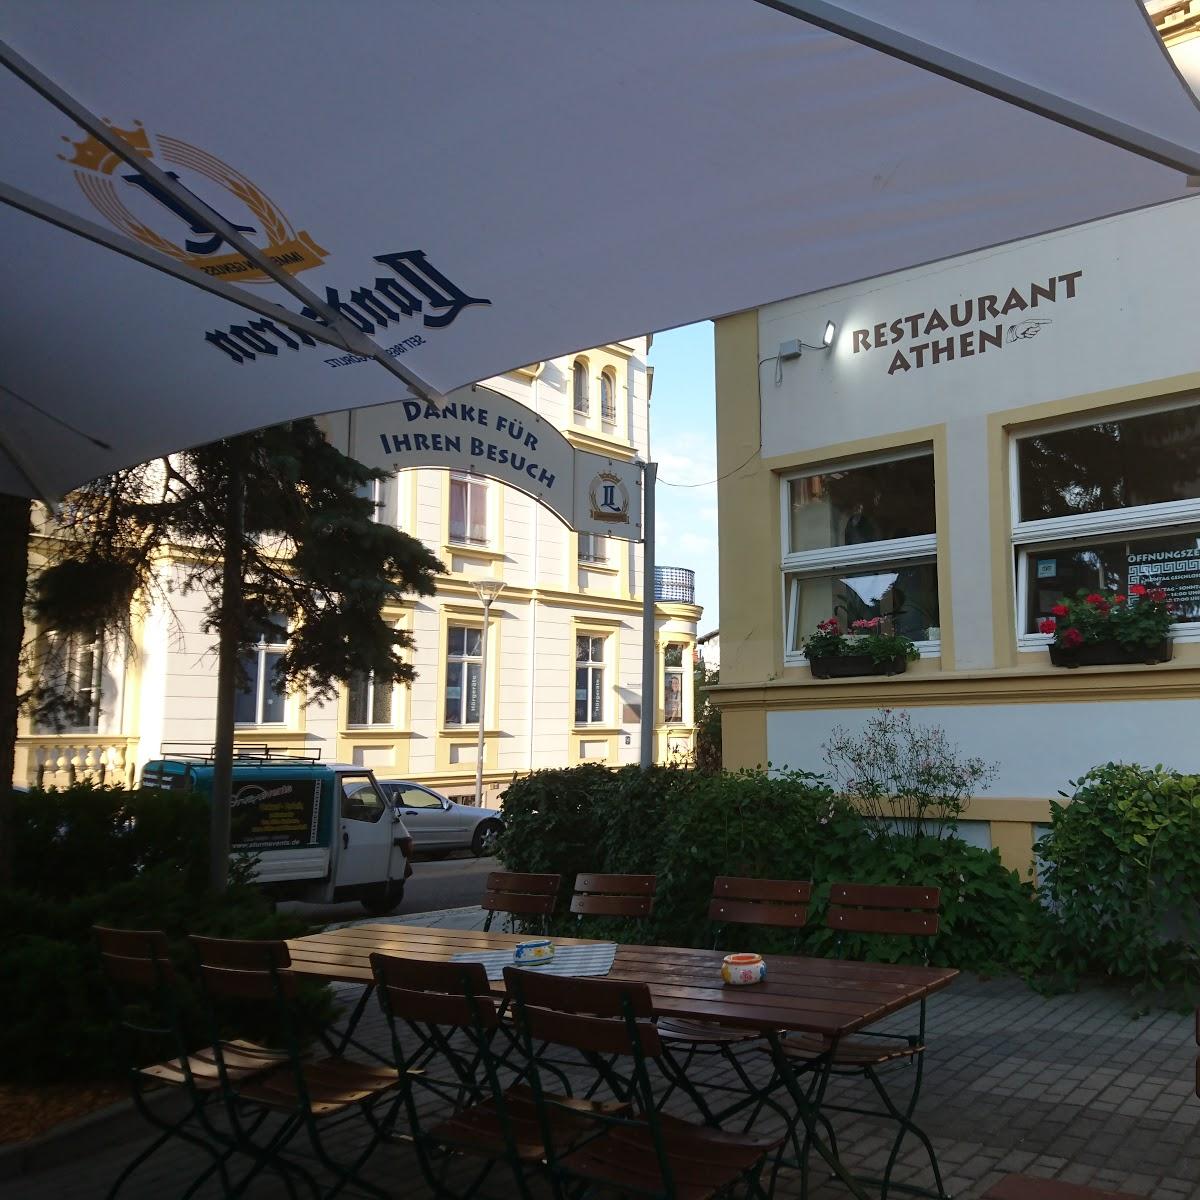 Restaurant "Athen" in Görlitz